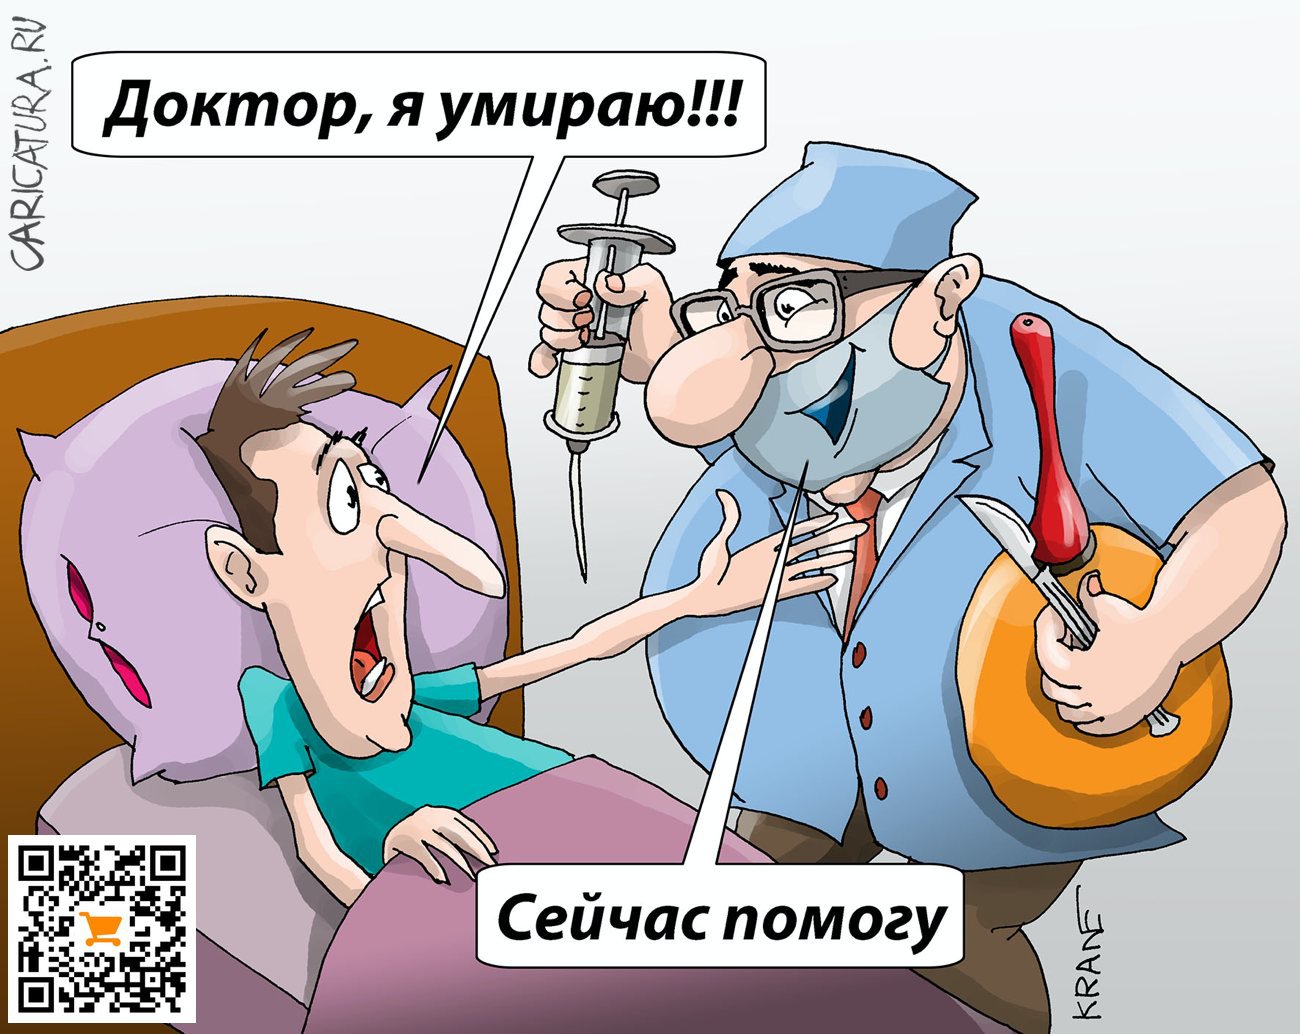 Карикатура "Доктор спешит на помощь", Евгений Кран